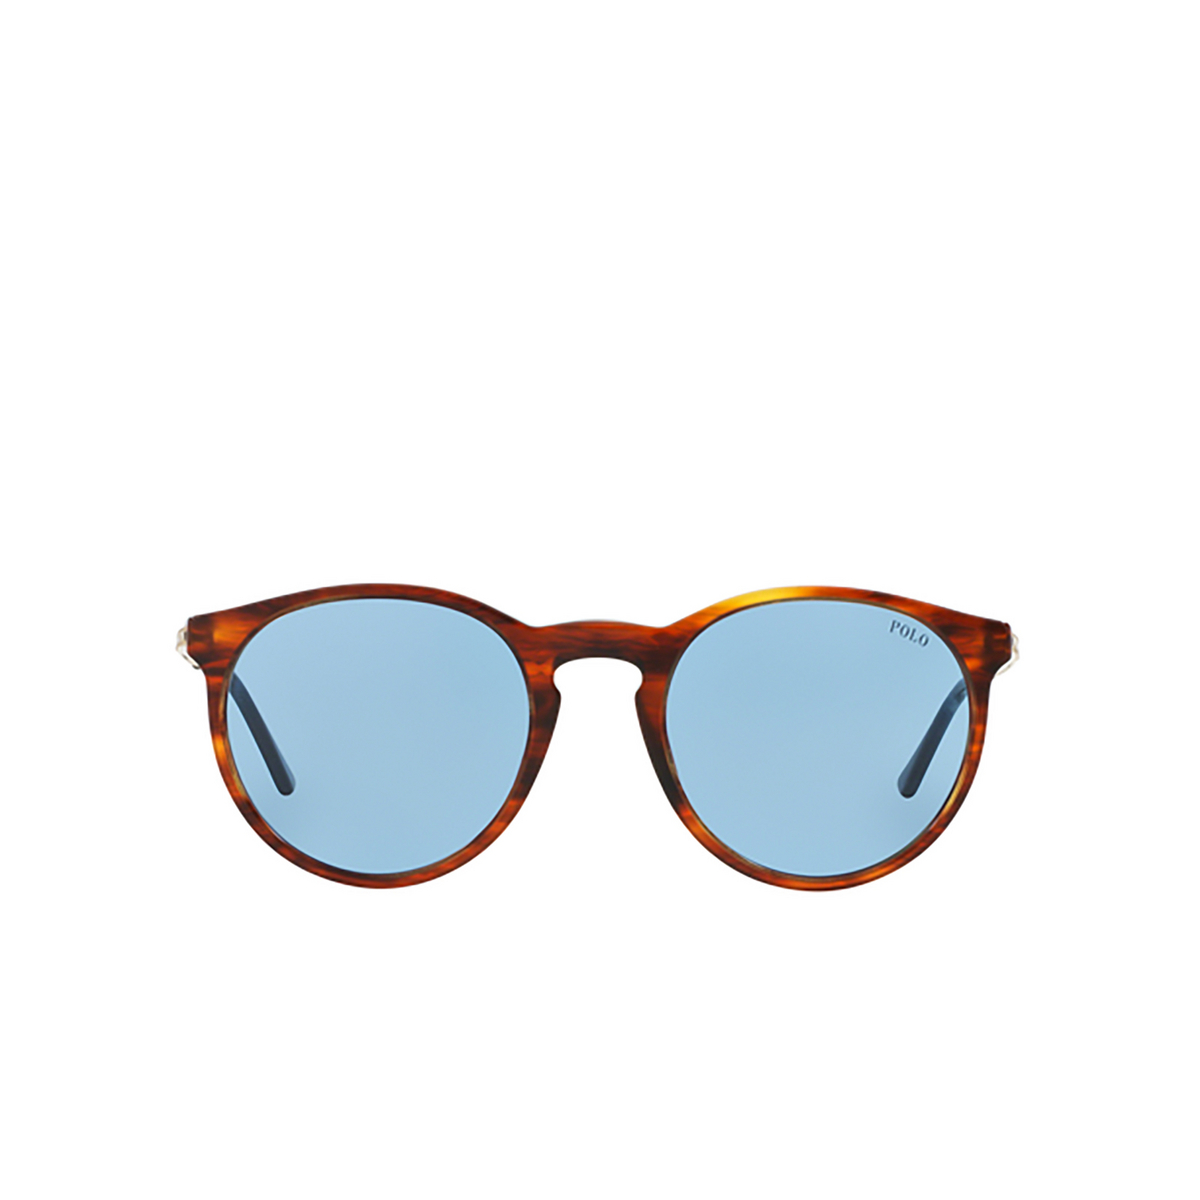 Polo Ralph Lauren® Round Sunglasses: PH4096 color 500772 - front view.